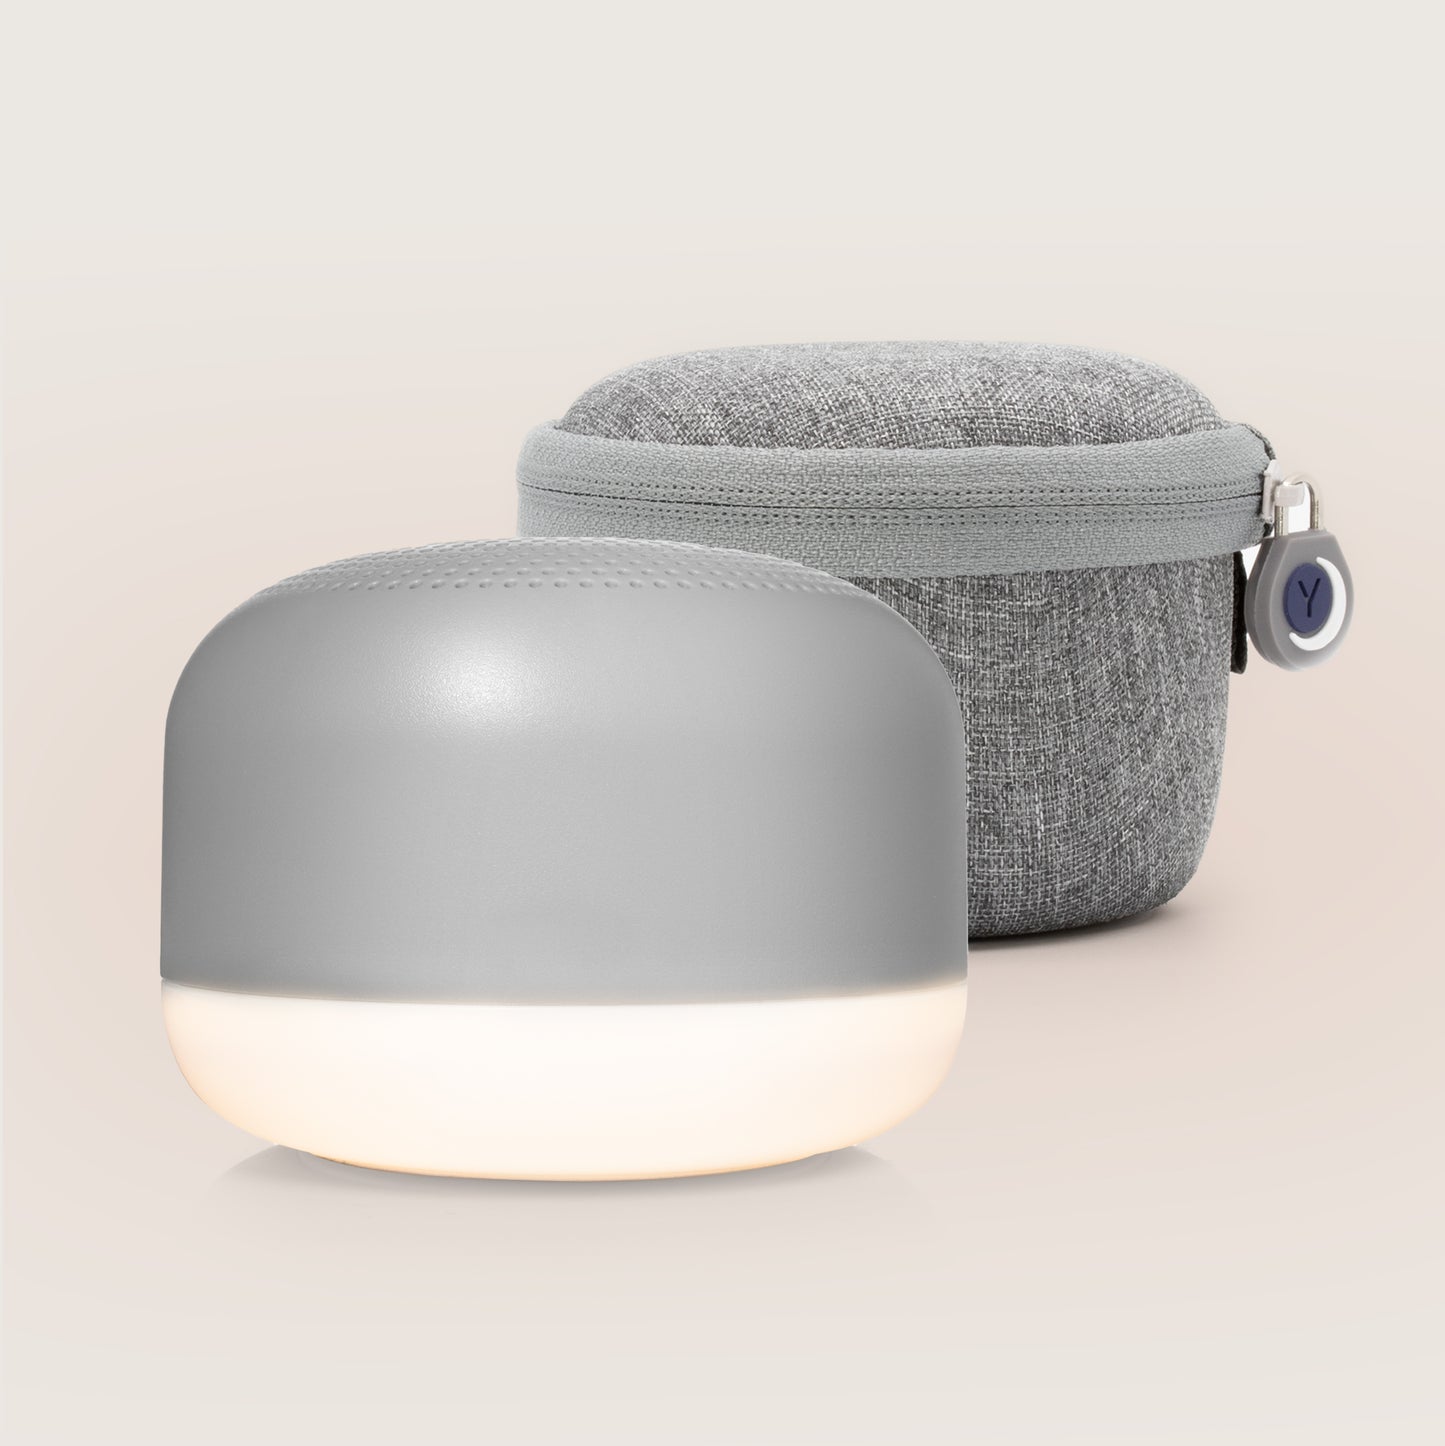 Travel Mini Sound Machine with Nightlight, Gray, and Travel Case